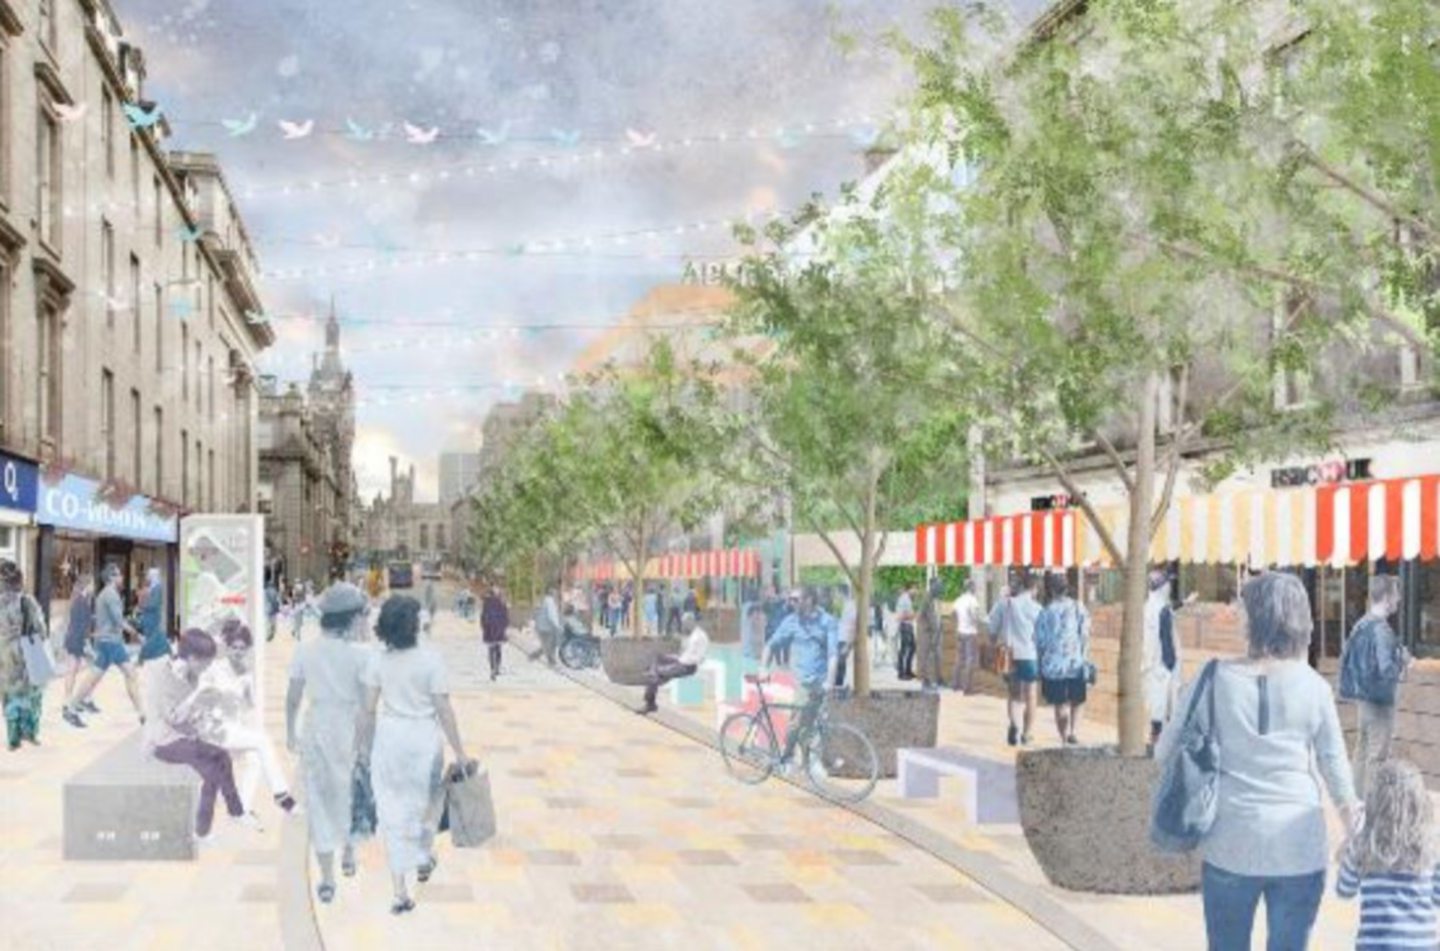 Pedestrianisation plans for Union Street (Image: Aberdeen City Council)